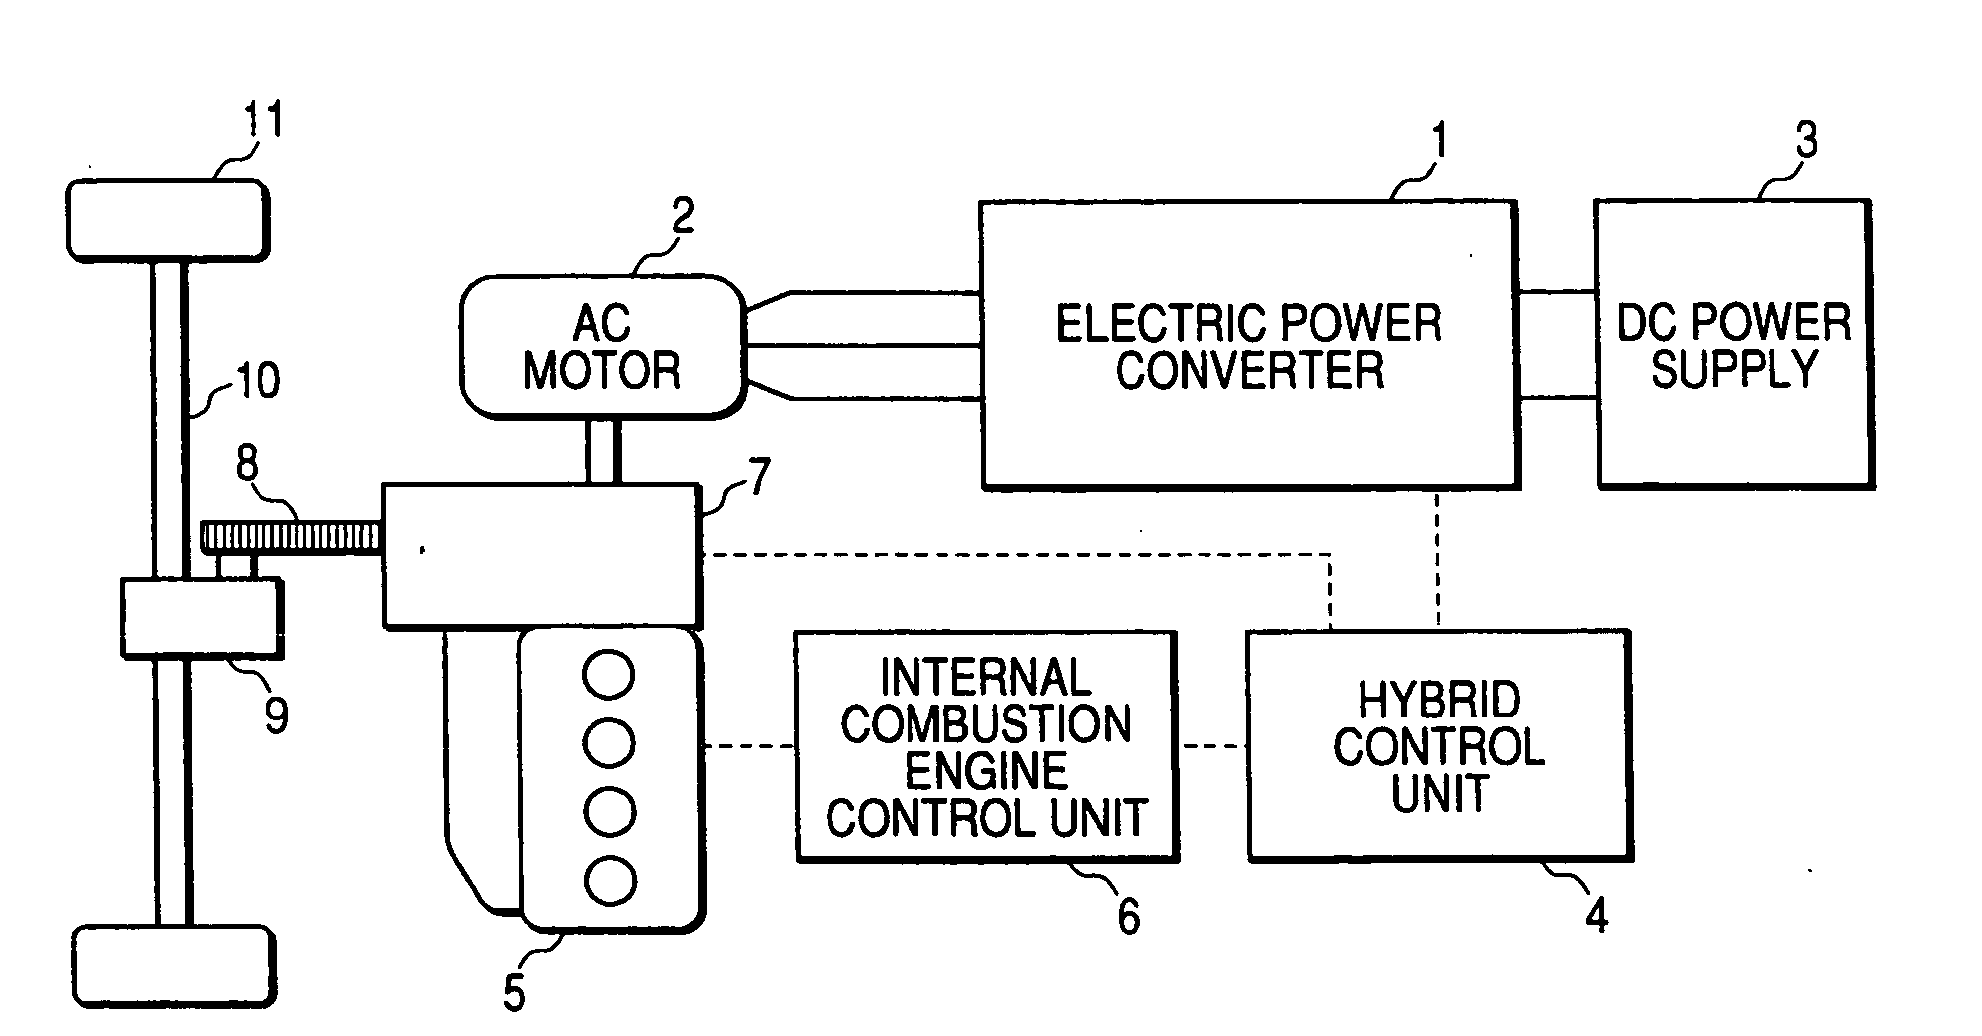 Vehicular power control apparatus